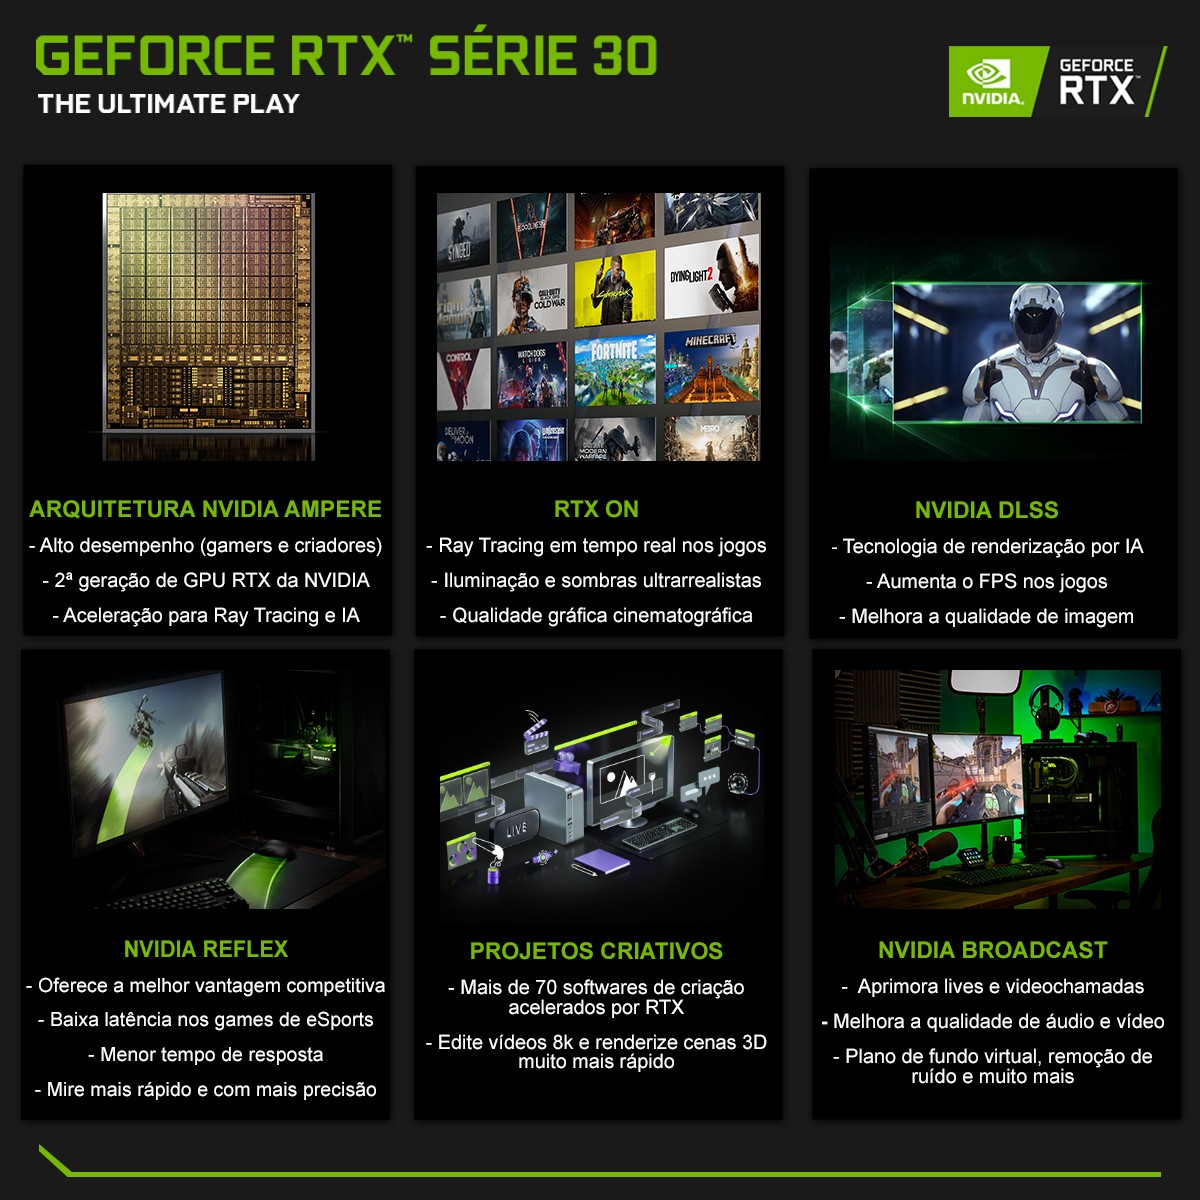 Placa de Vídeo Asus ROG Strix Geforce RTX 3060 OC, LHR, 12GB, GDDR6, DLSS, Ray Tracing, ROG-STRIX-RTX3060-O12G-V2-GAMING